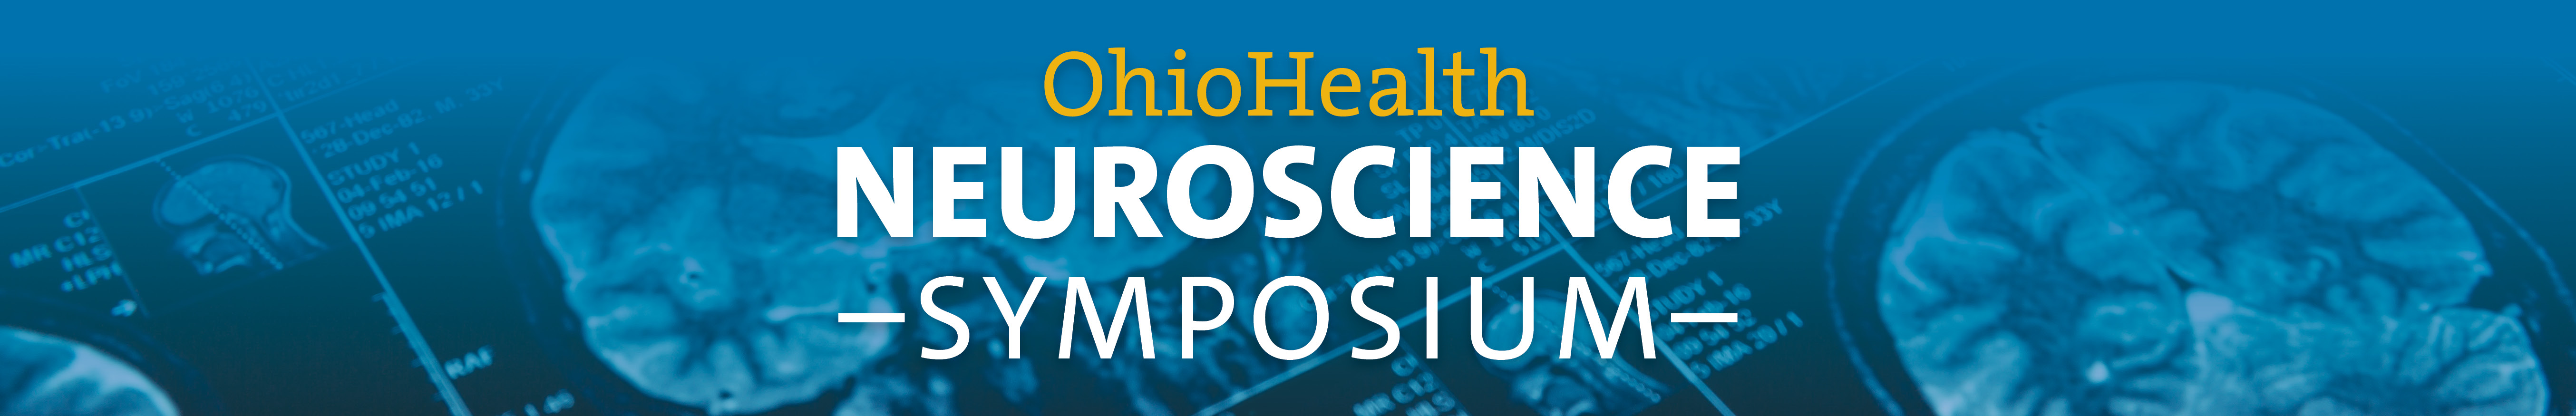 2021 OhioHealth Neuroscience Virtual Symposium Banner